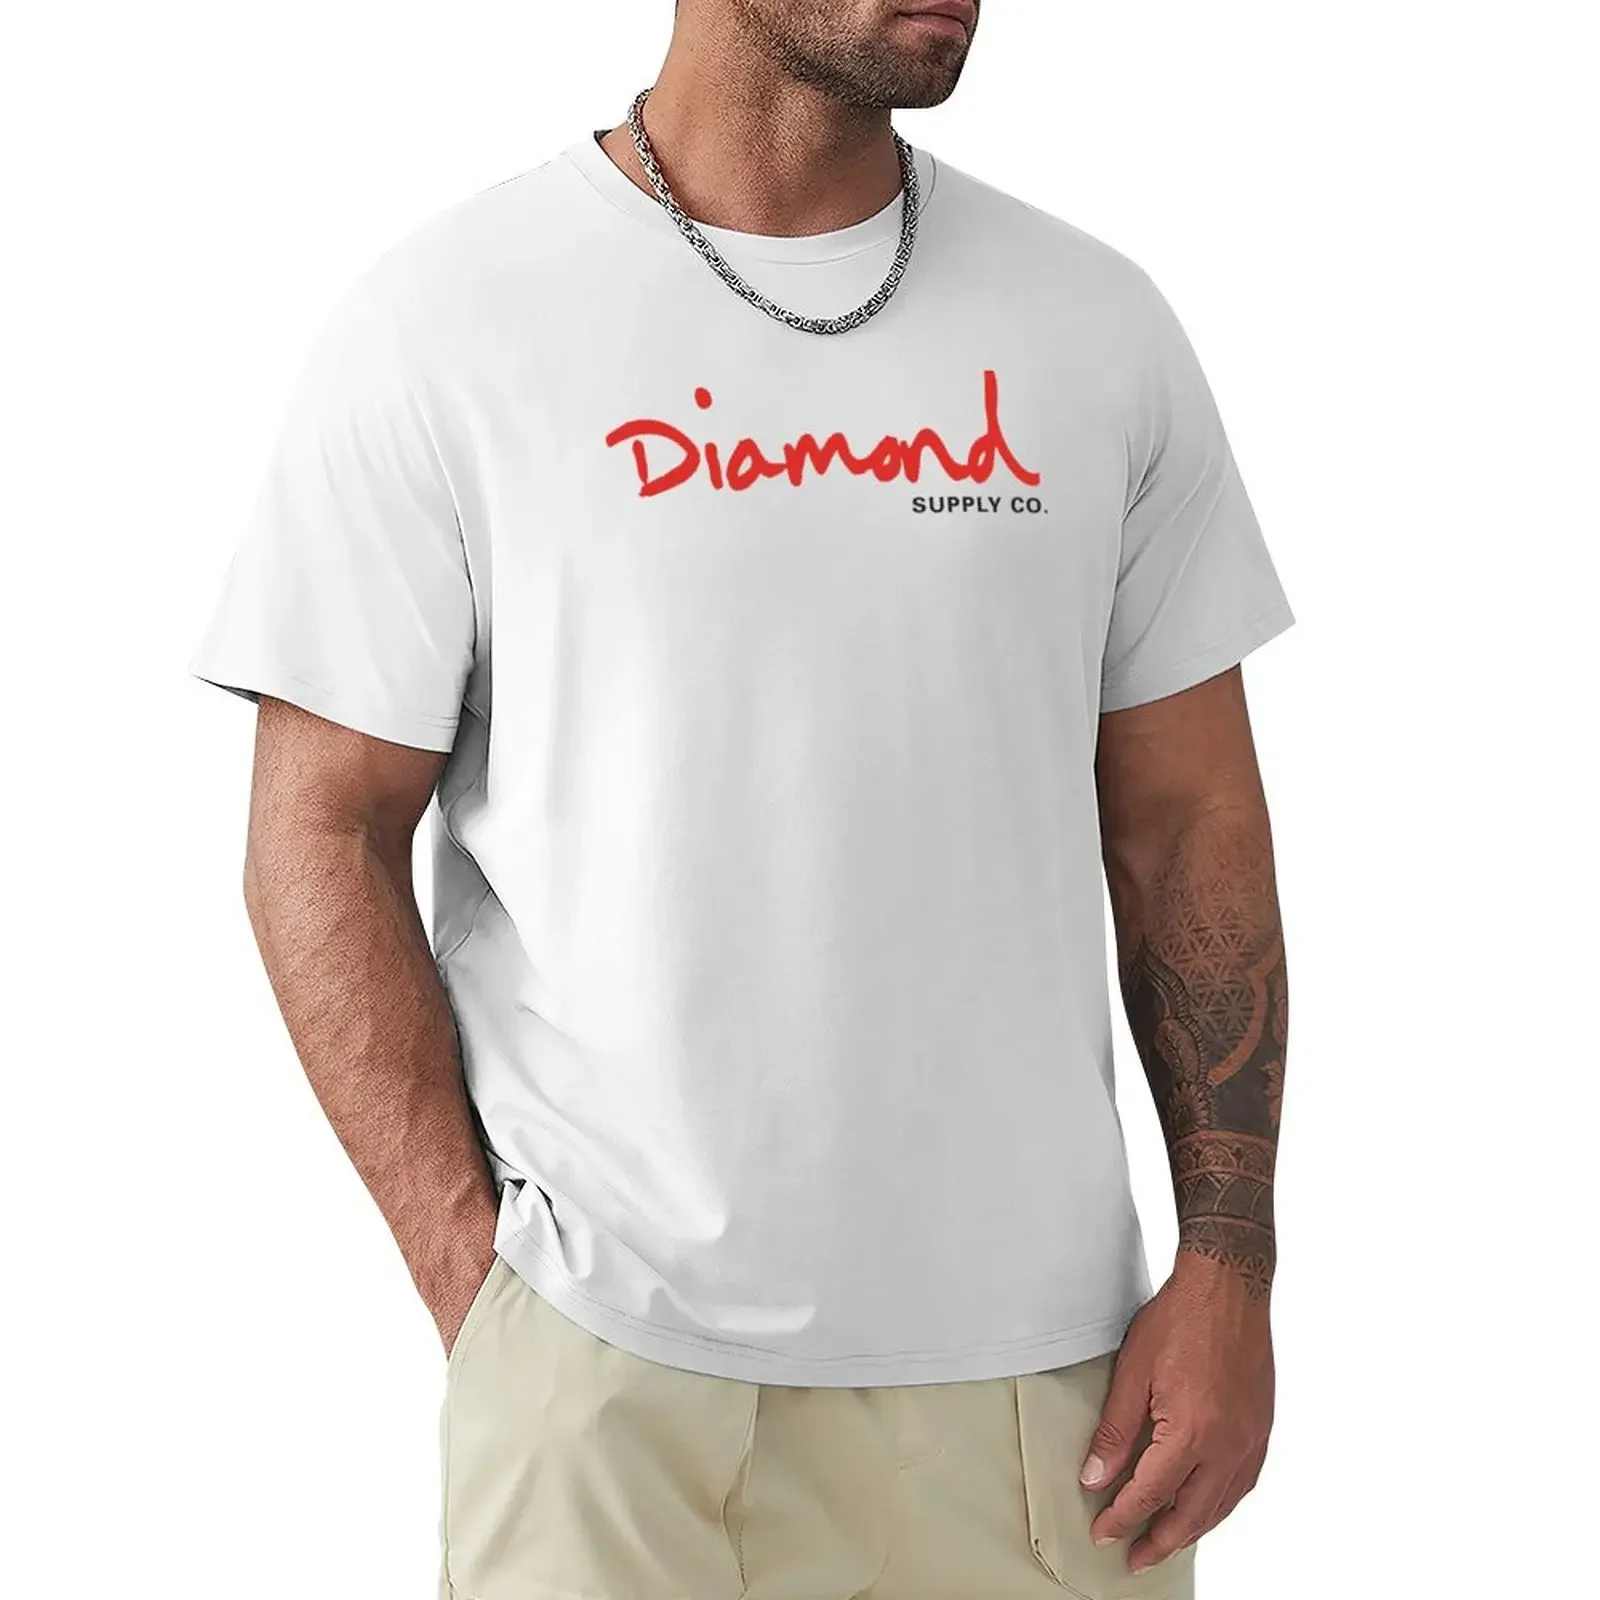 

Diamond Supply Co T-shirt new edition summer clothes hippie clothes mens plain t shirts